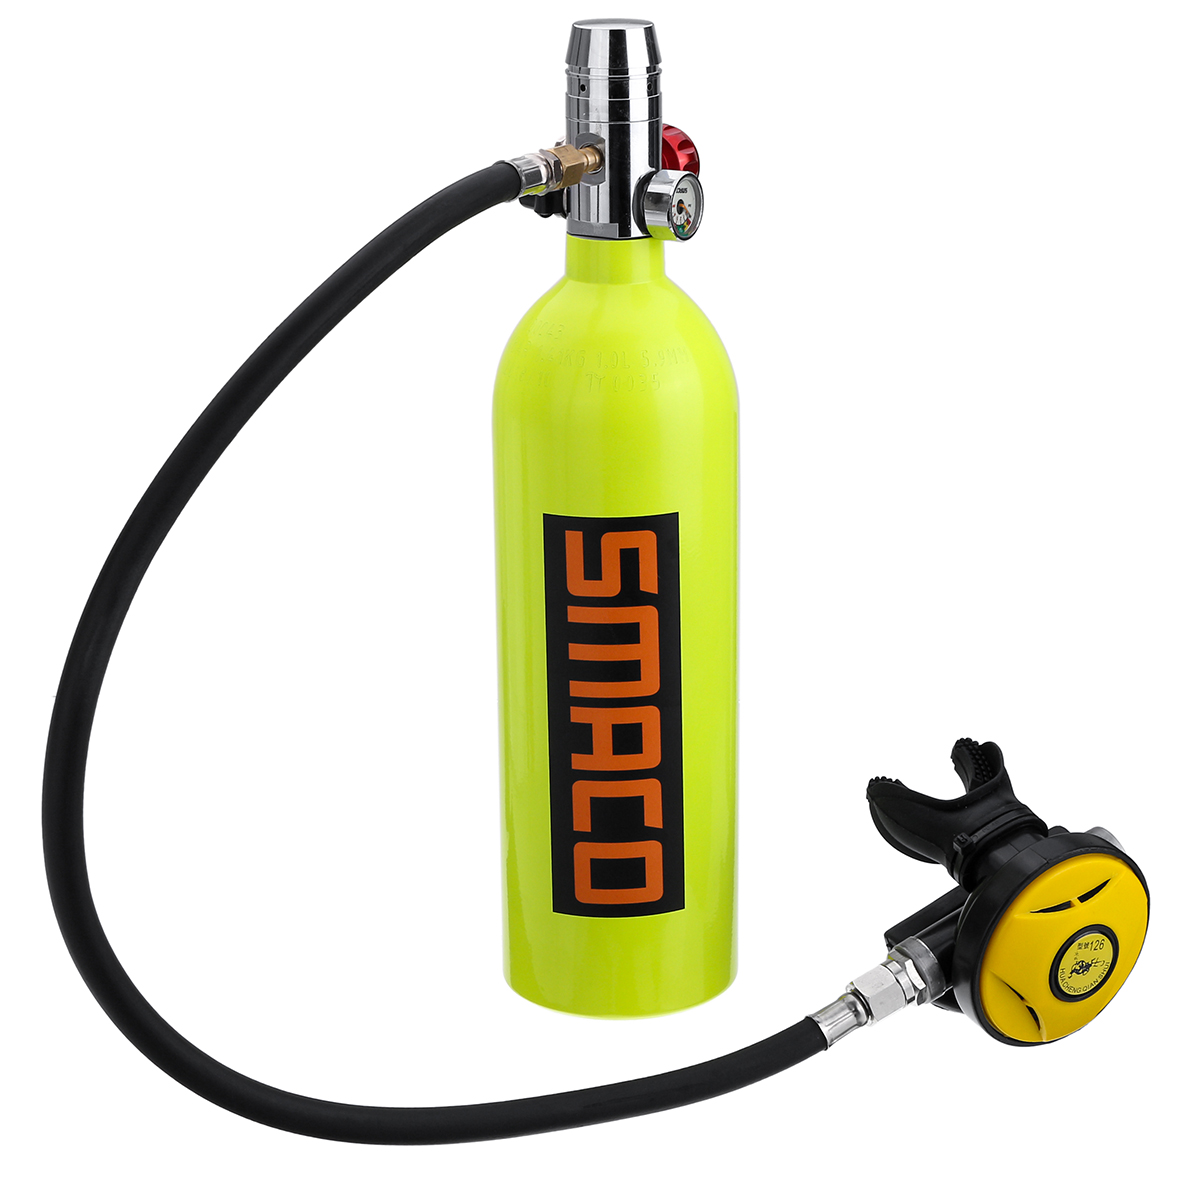 

SMACO 1L Scuba Oxygen Cylinder S400 Diving Air Tank Diving Respirator Valve Relieve Valve Kit